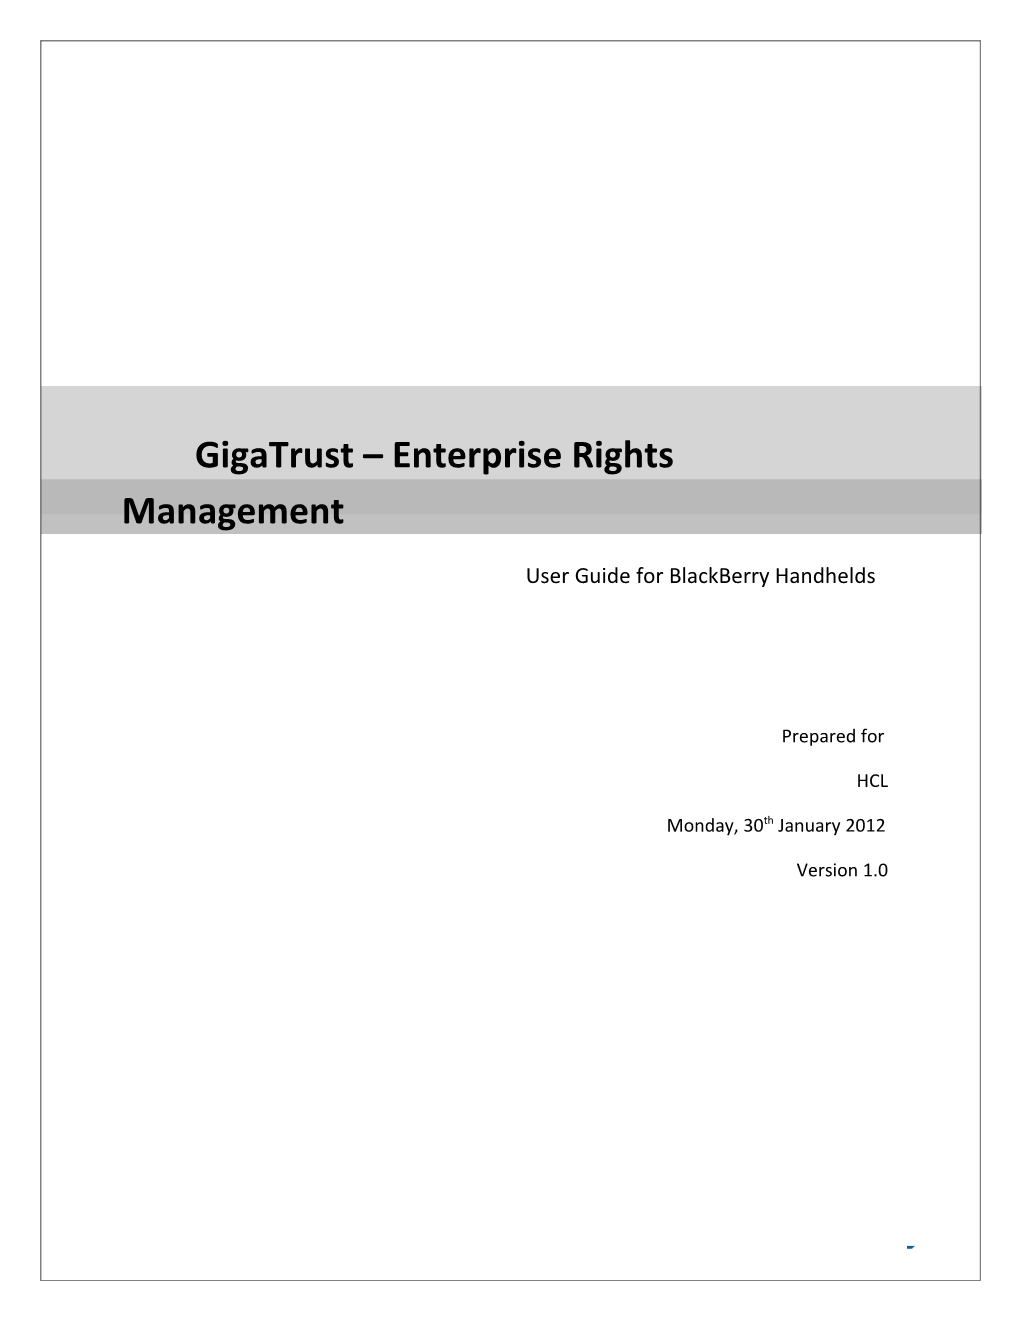 Gigatrust Enterprise Rights Management